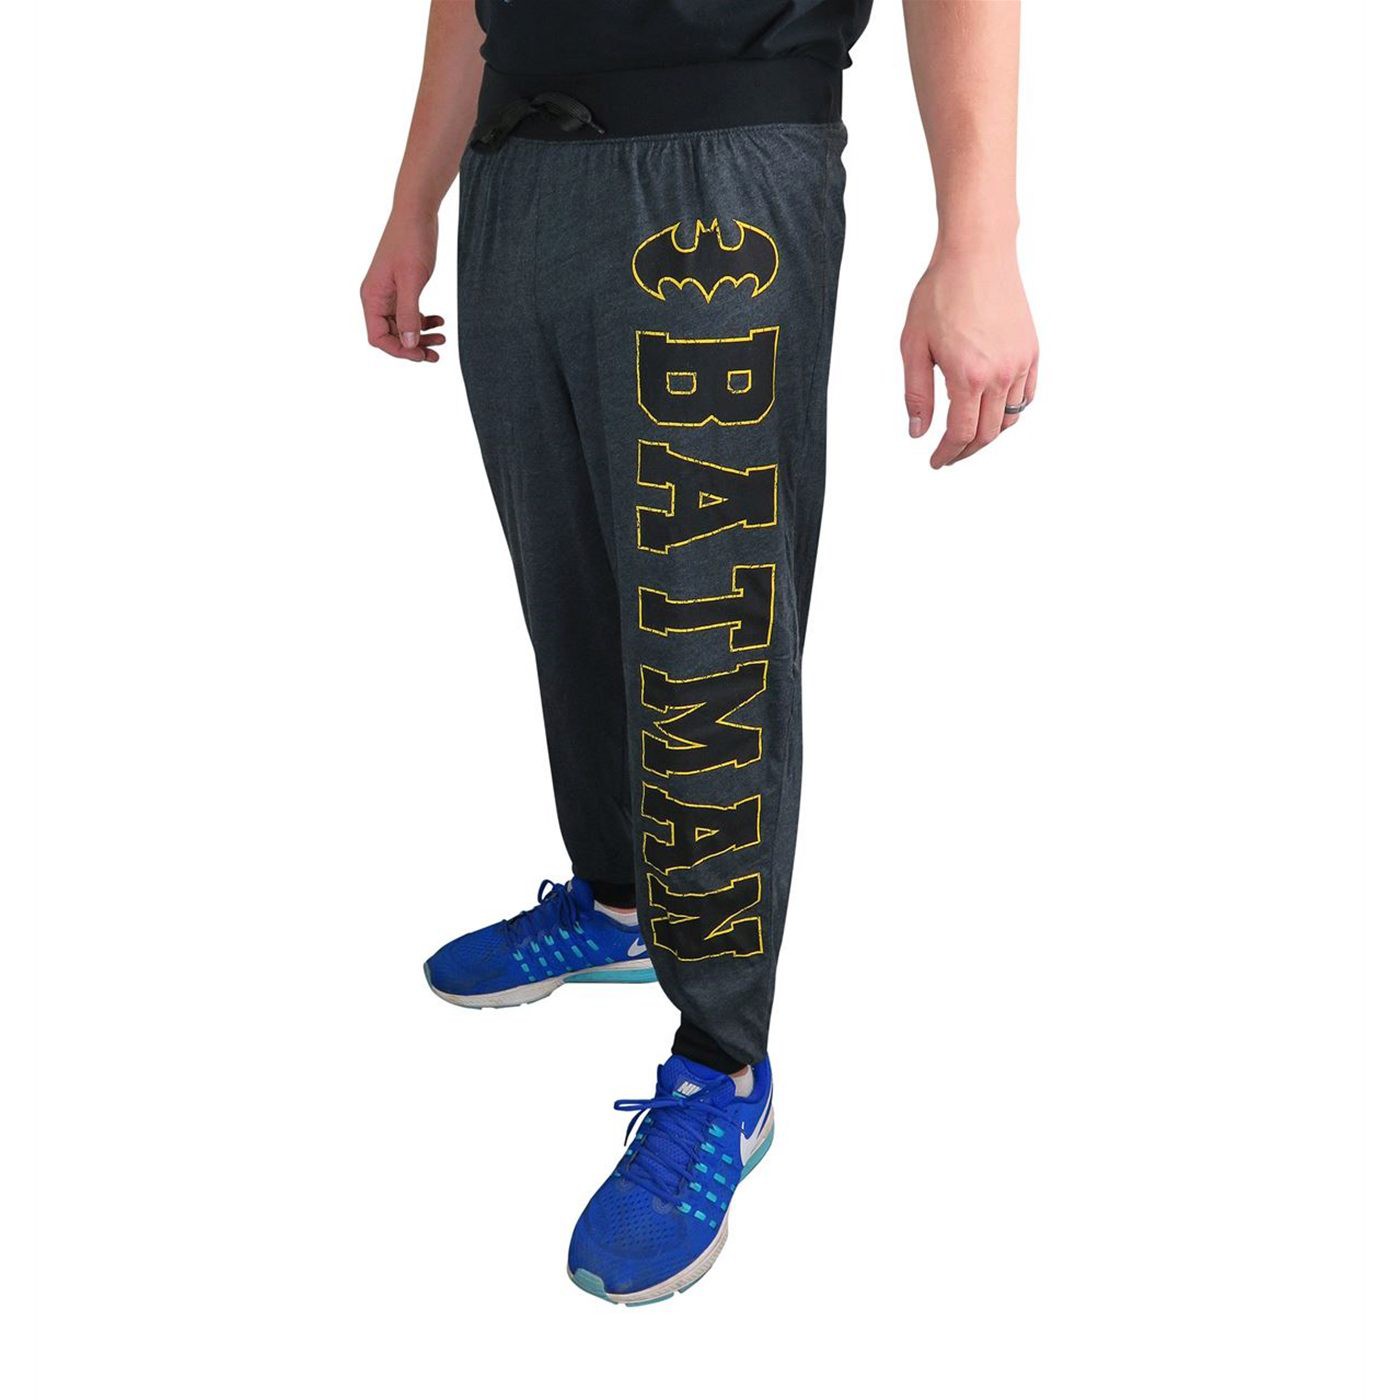 Batman pants